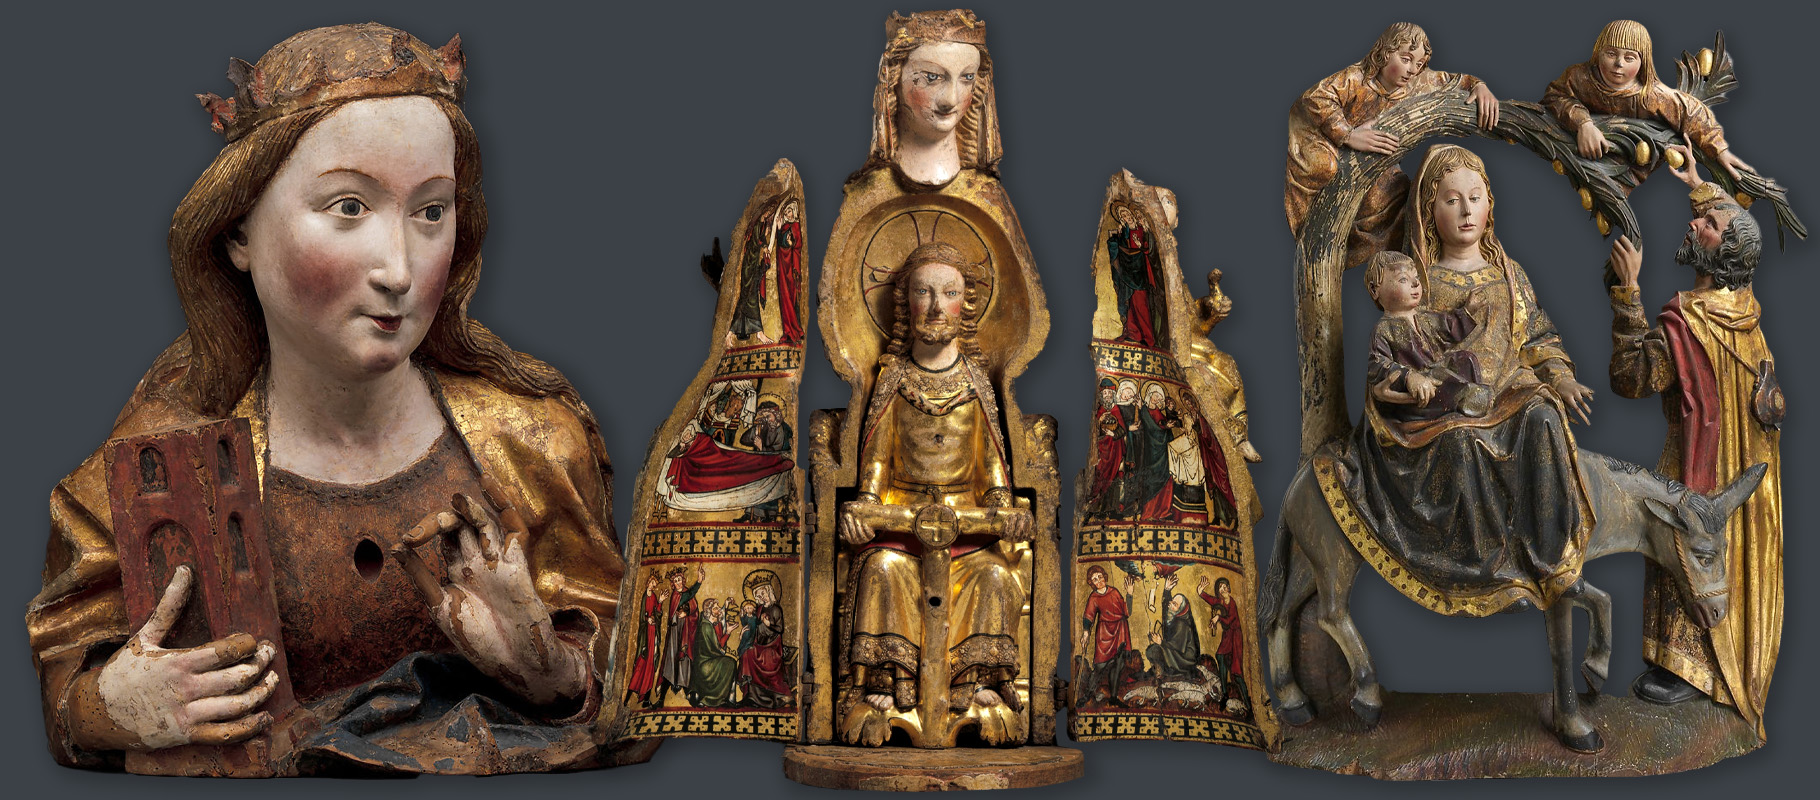 15th century wooden sculptures